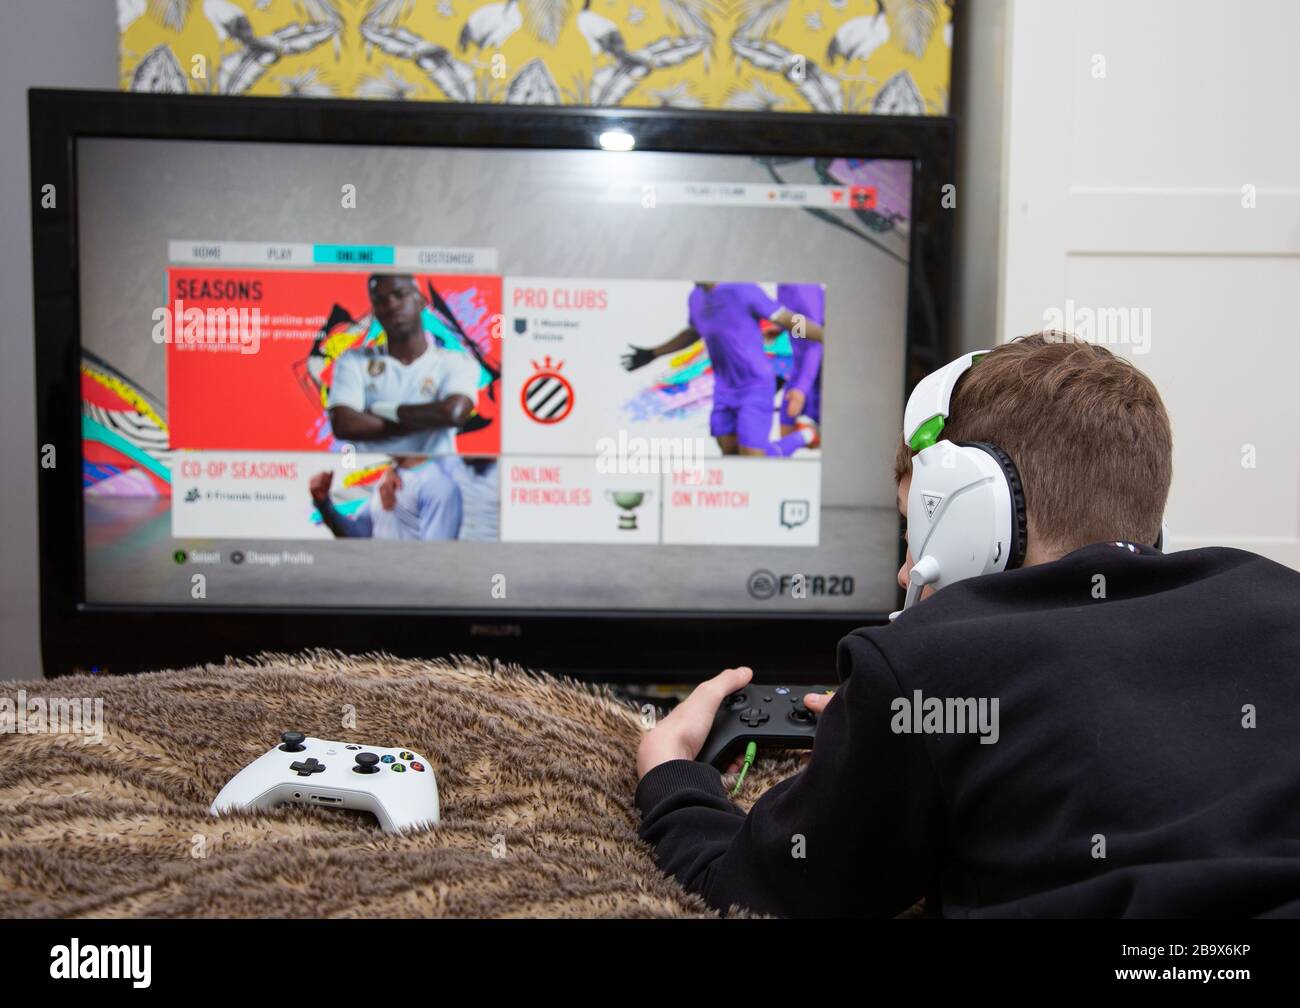 Boy Plays FIFA 20 on Xbox Stock Photo